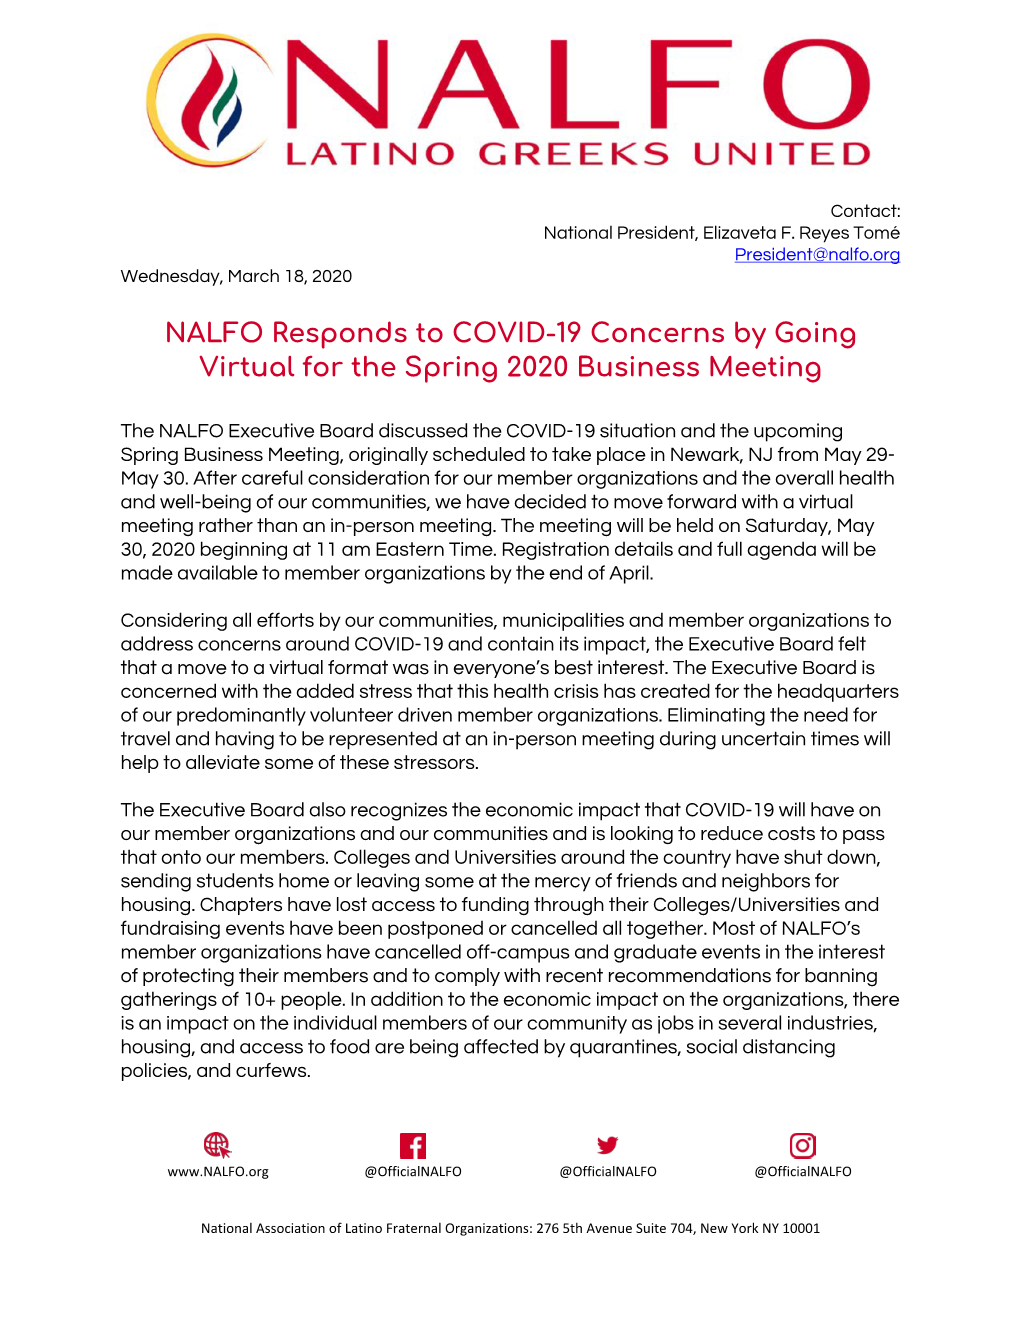 NALFO Response to Covid-19